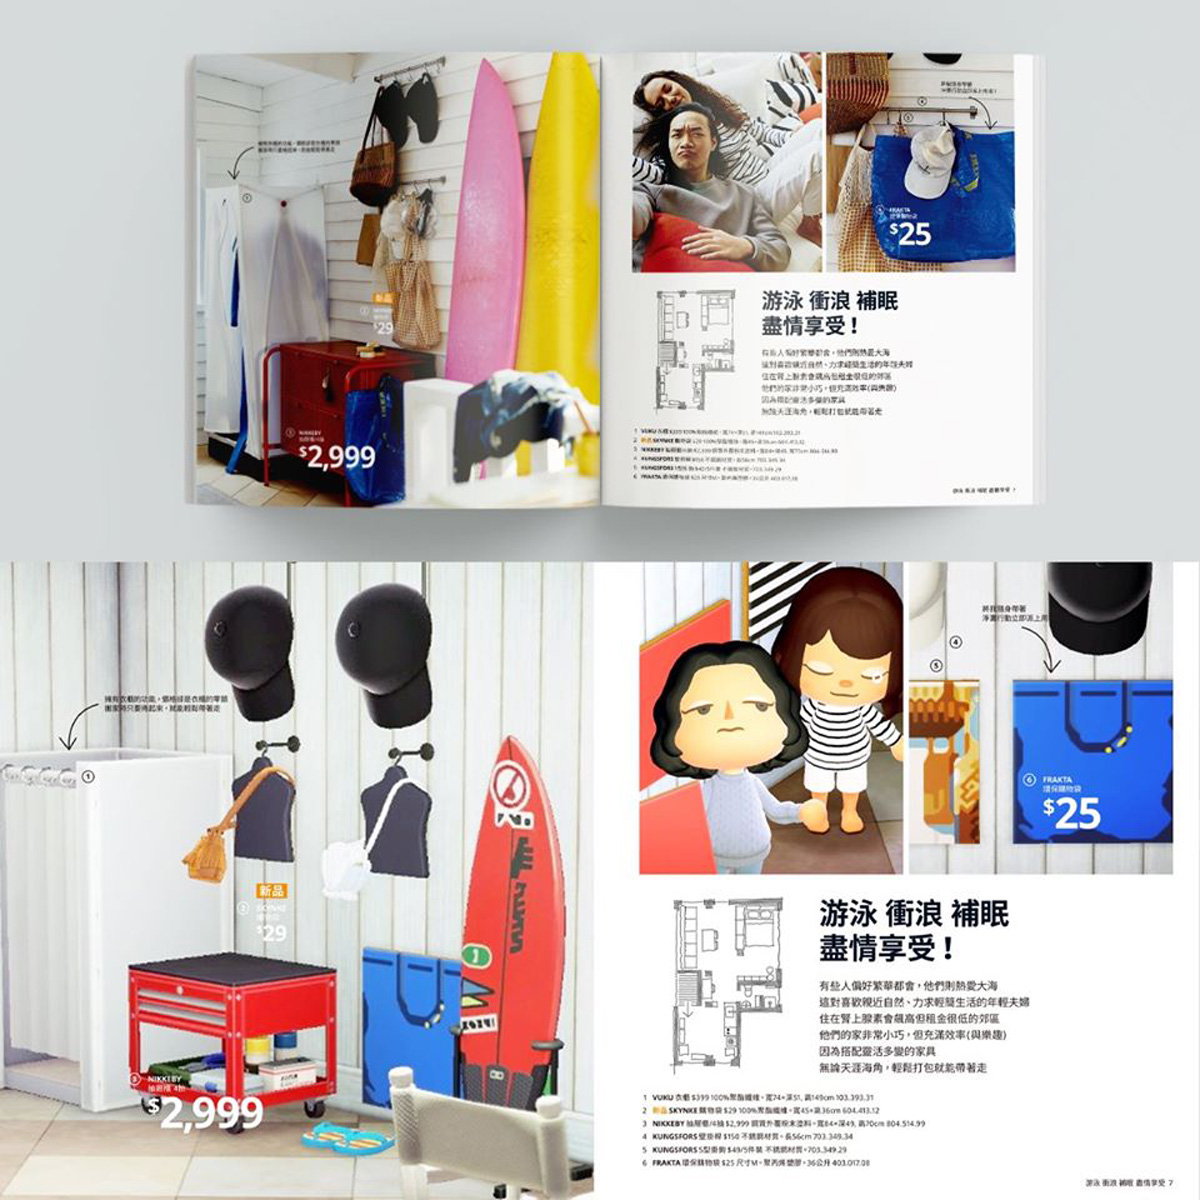 IKEA Taiwan 2021 Catalog Animal Crossing